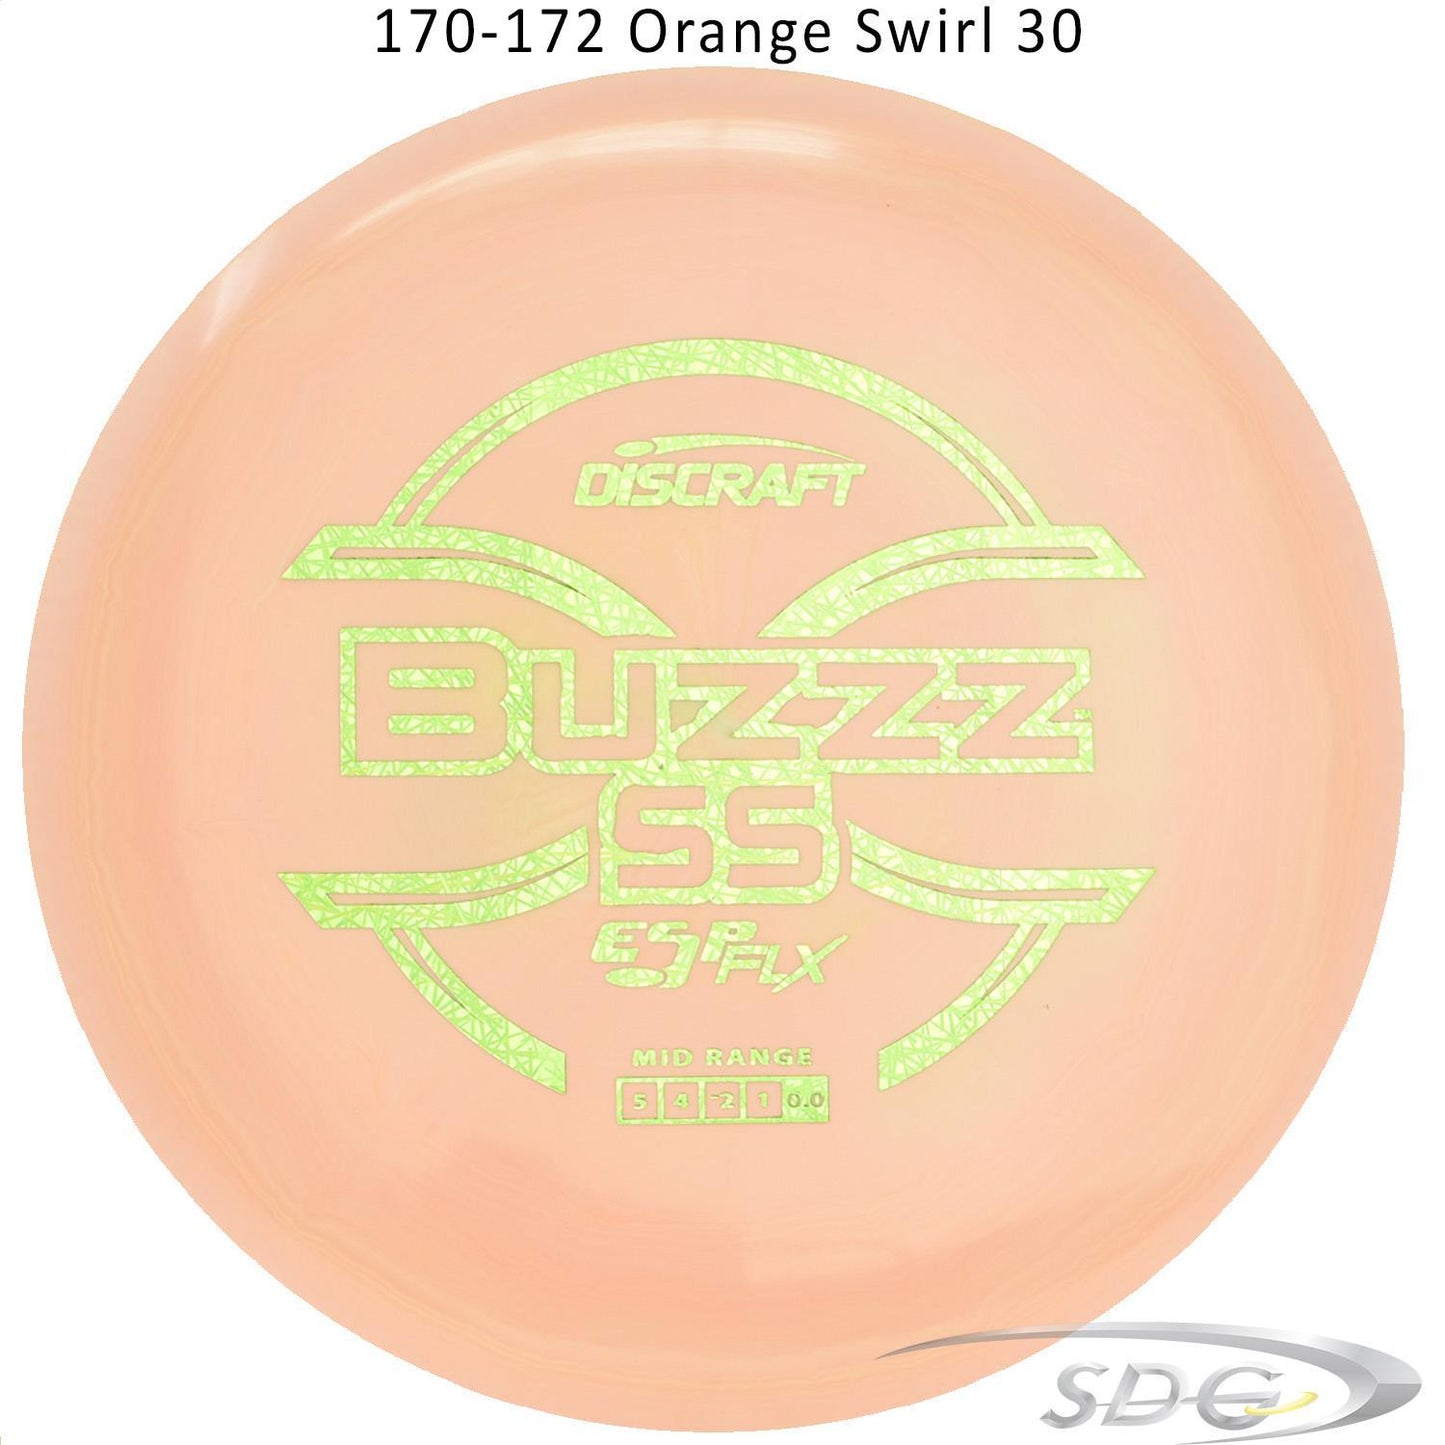 discraft-esp-flx-buzzz-ss-disc-golf-mid-range 170-172 Orange Swirl 30 